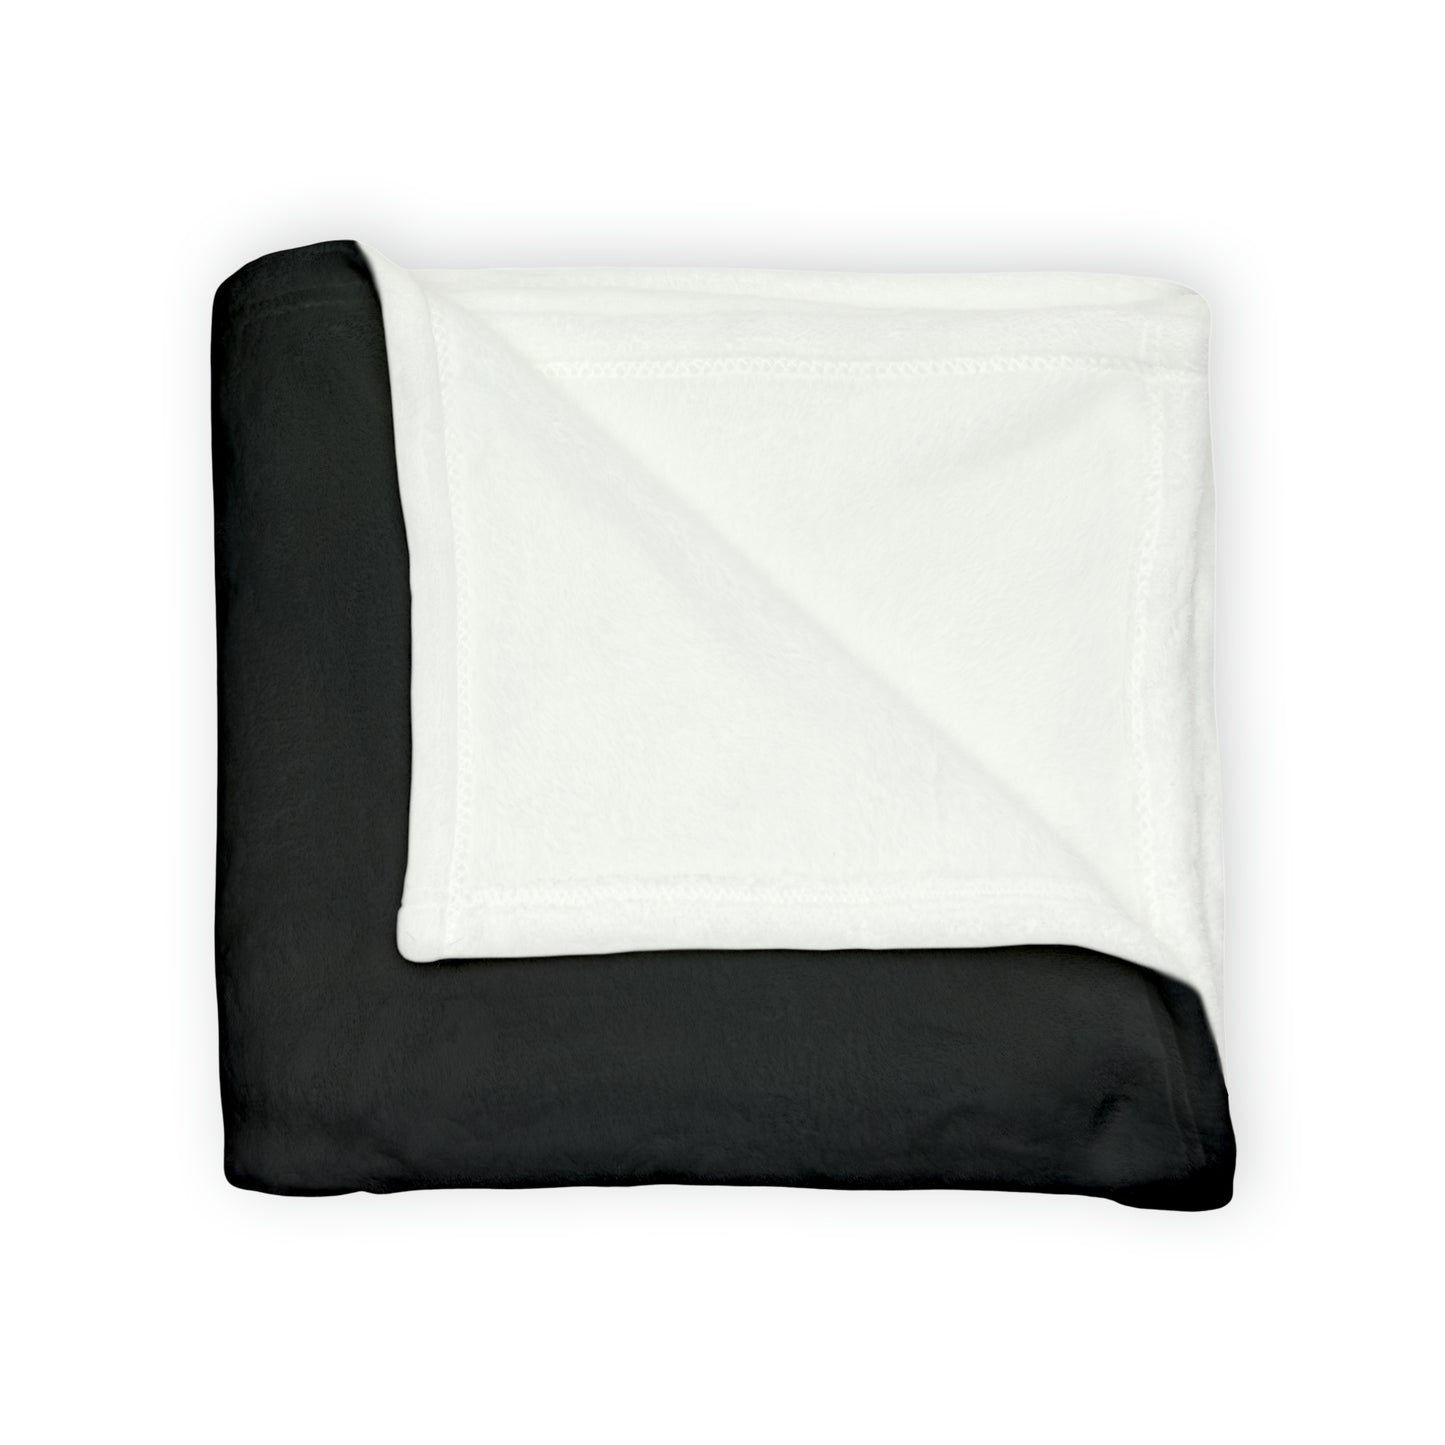 Coldstream Guards Fleece Blanket (Black Background)